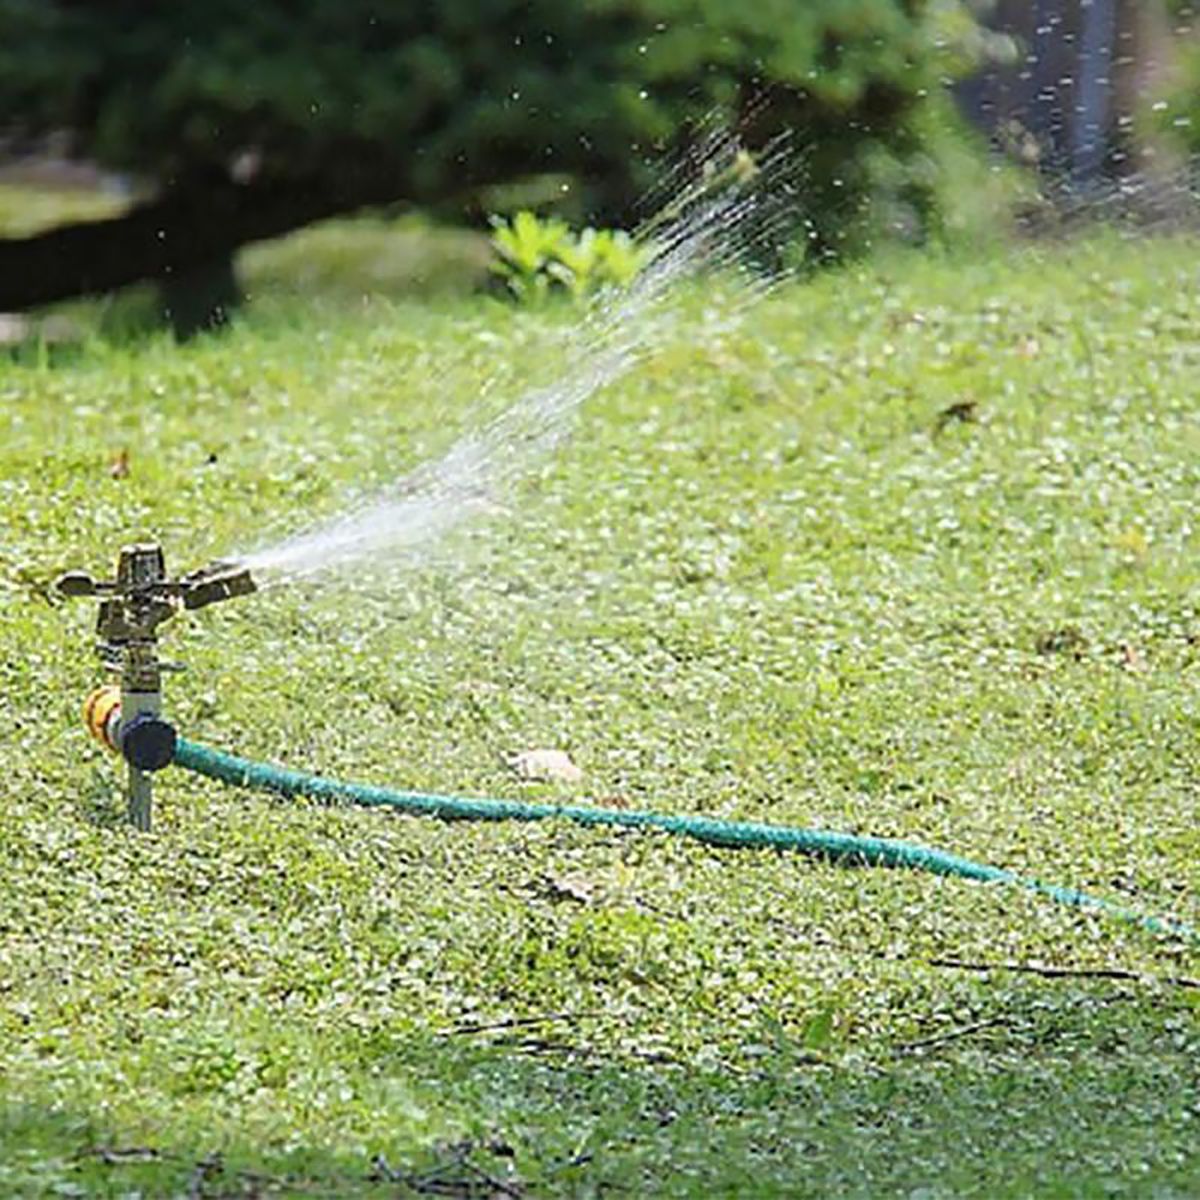 Zinc-Alloy-Lawn-Garden-Sprinkler-360deg-Water-Spray-Hose-Irrigation-System-Tools-1377046